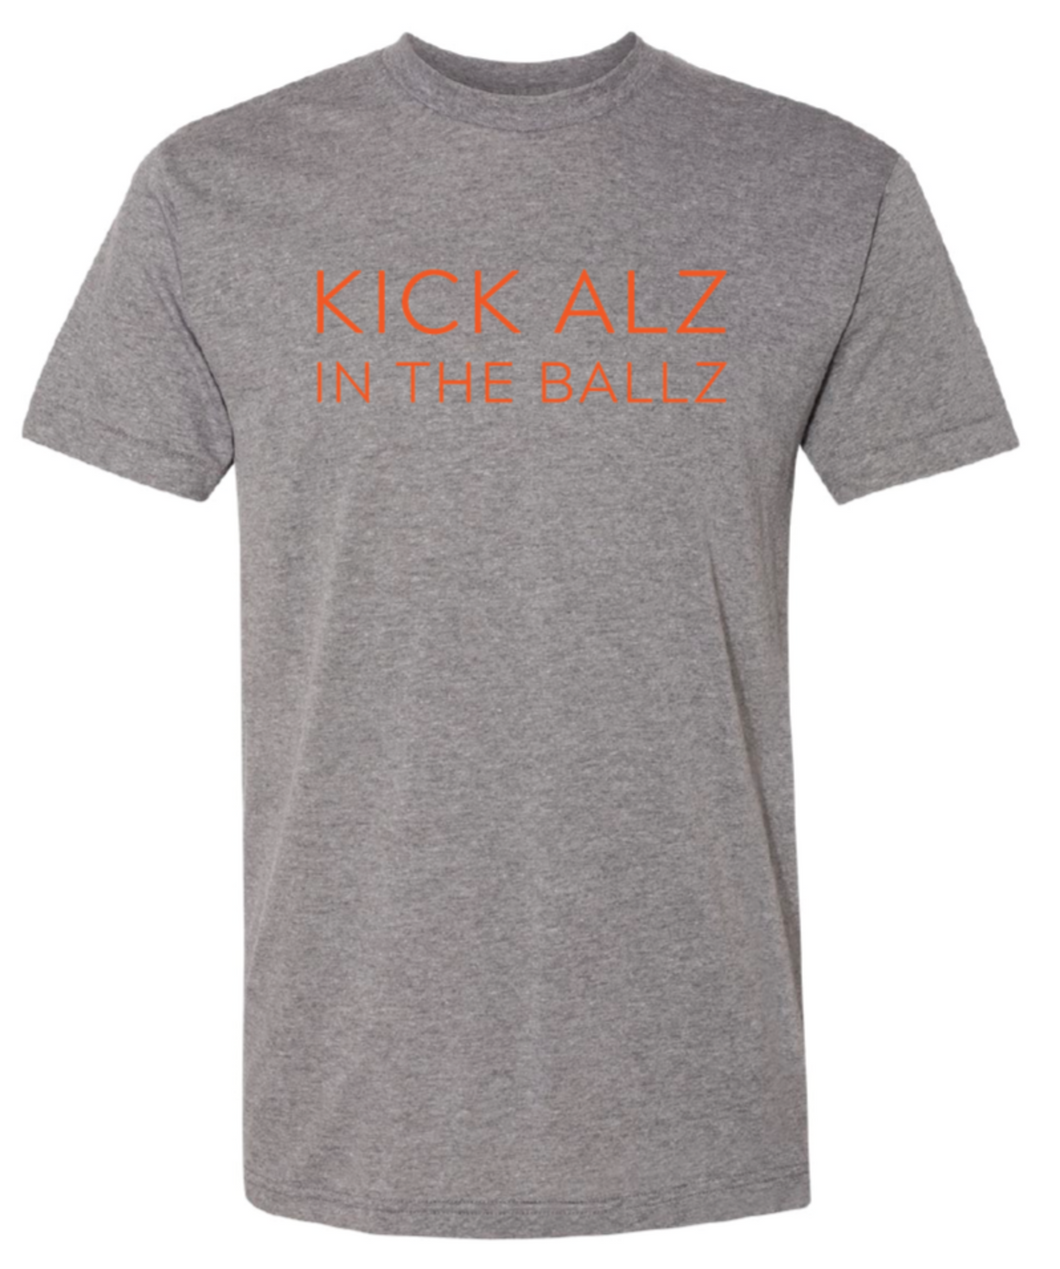 Kick Alz in the Ballz T-Shirt